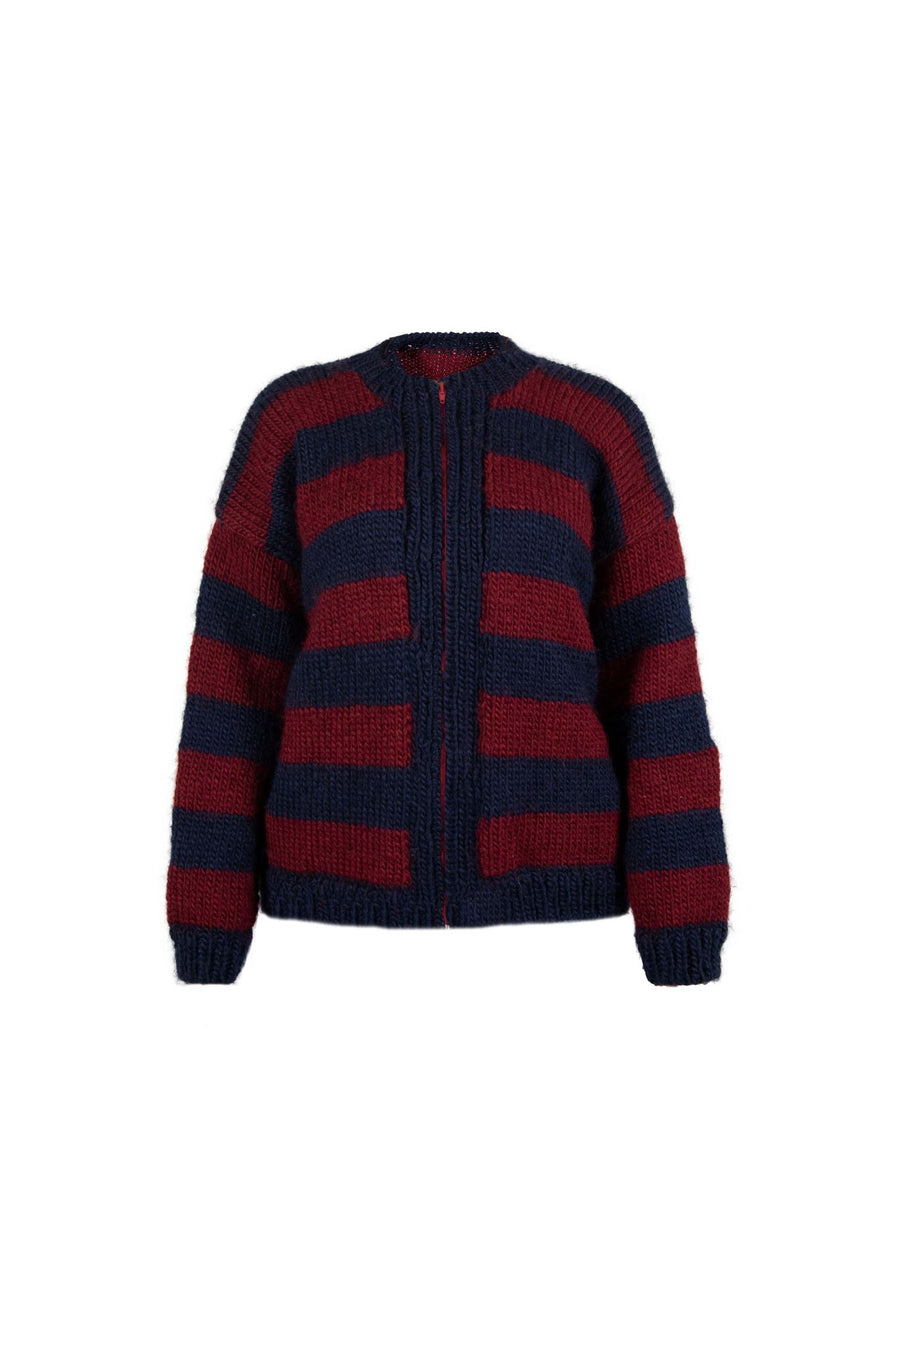 Stripe Sweater Burgundy